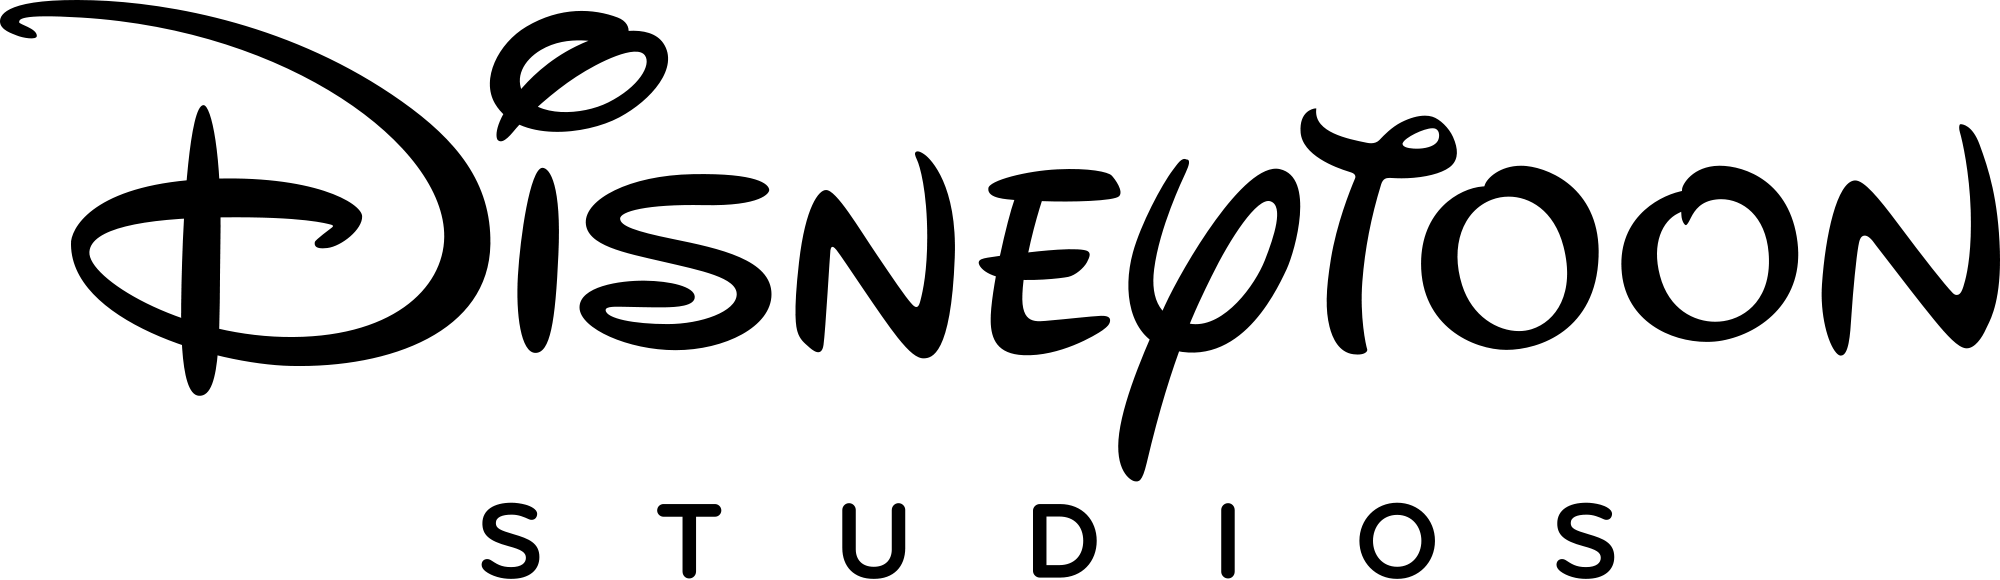 DisneyToon Studios Logo - Disneytoon Studios